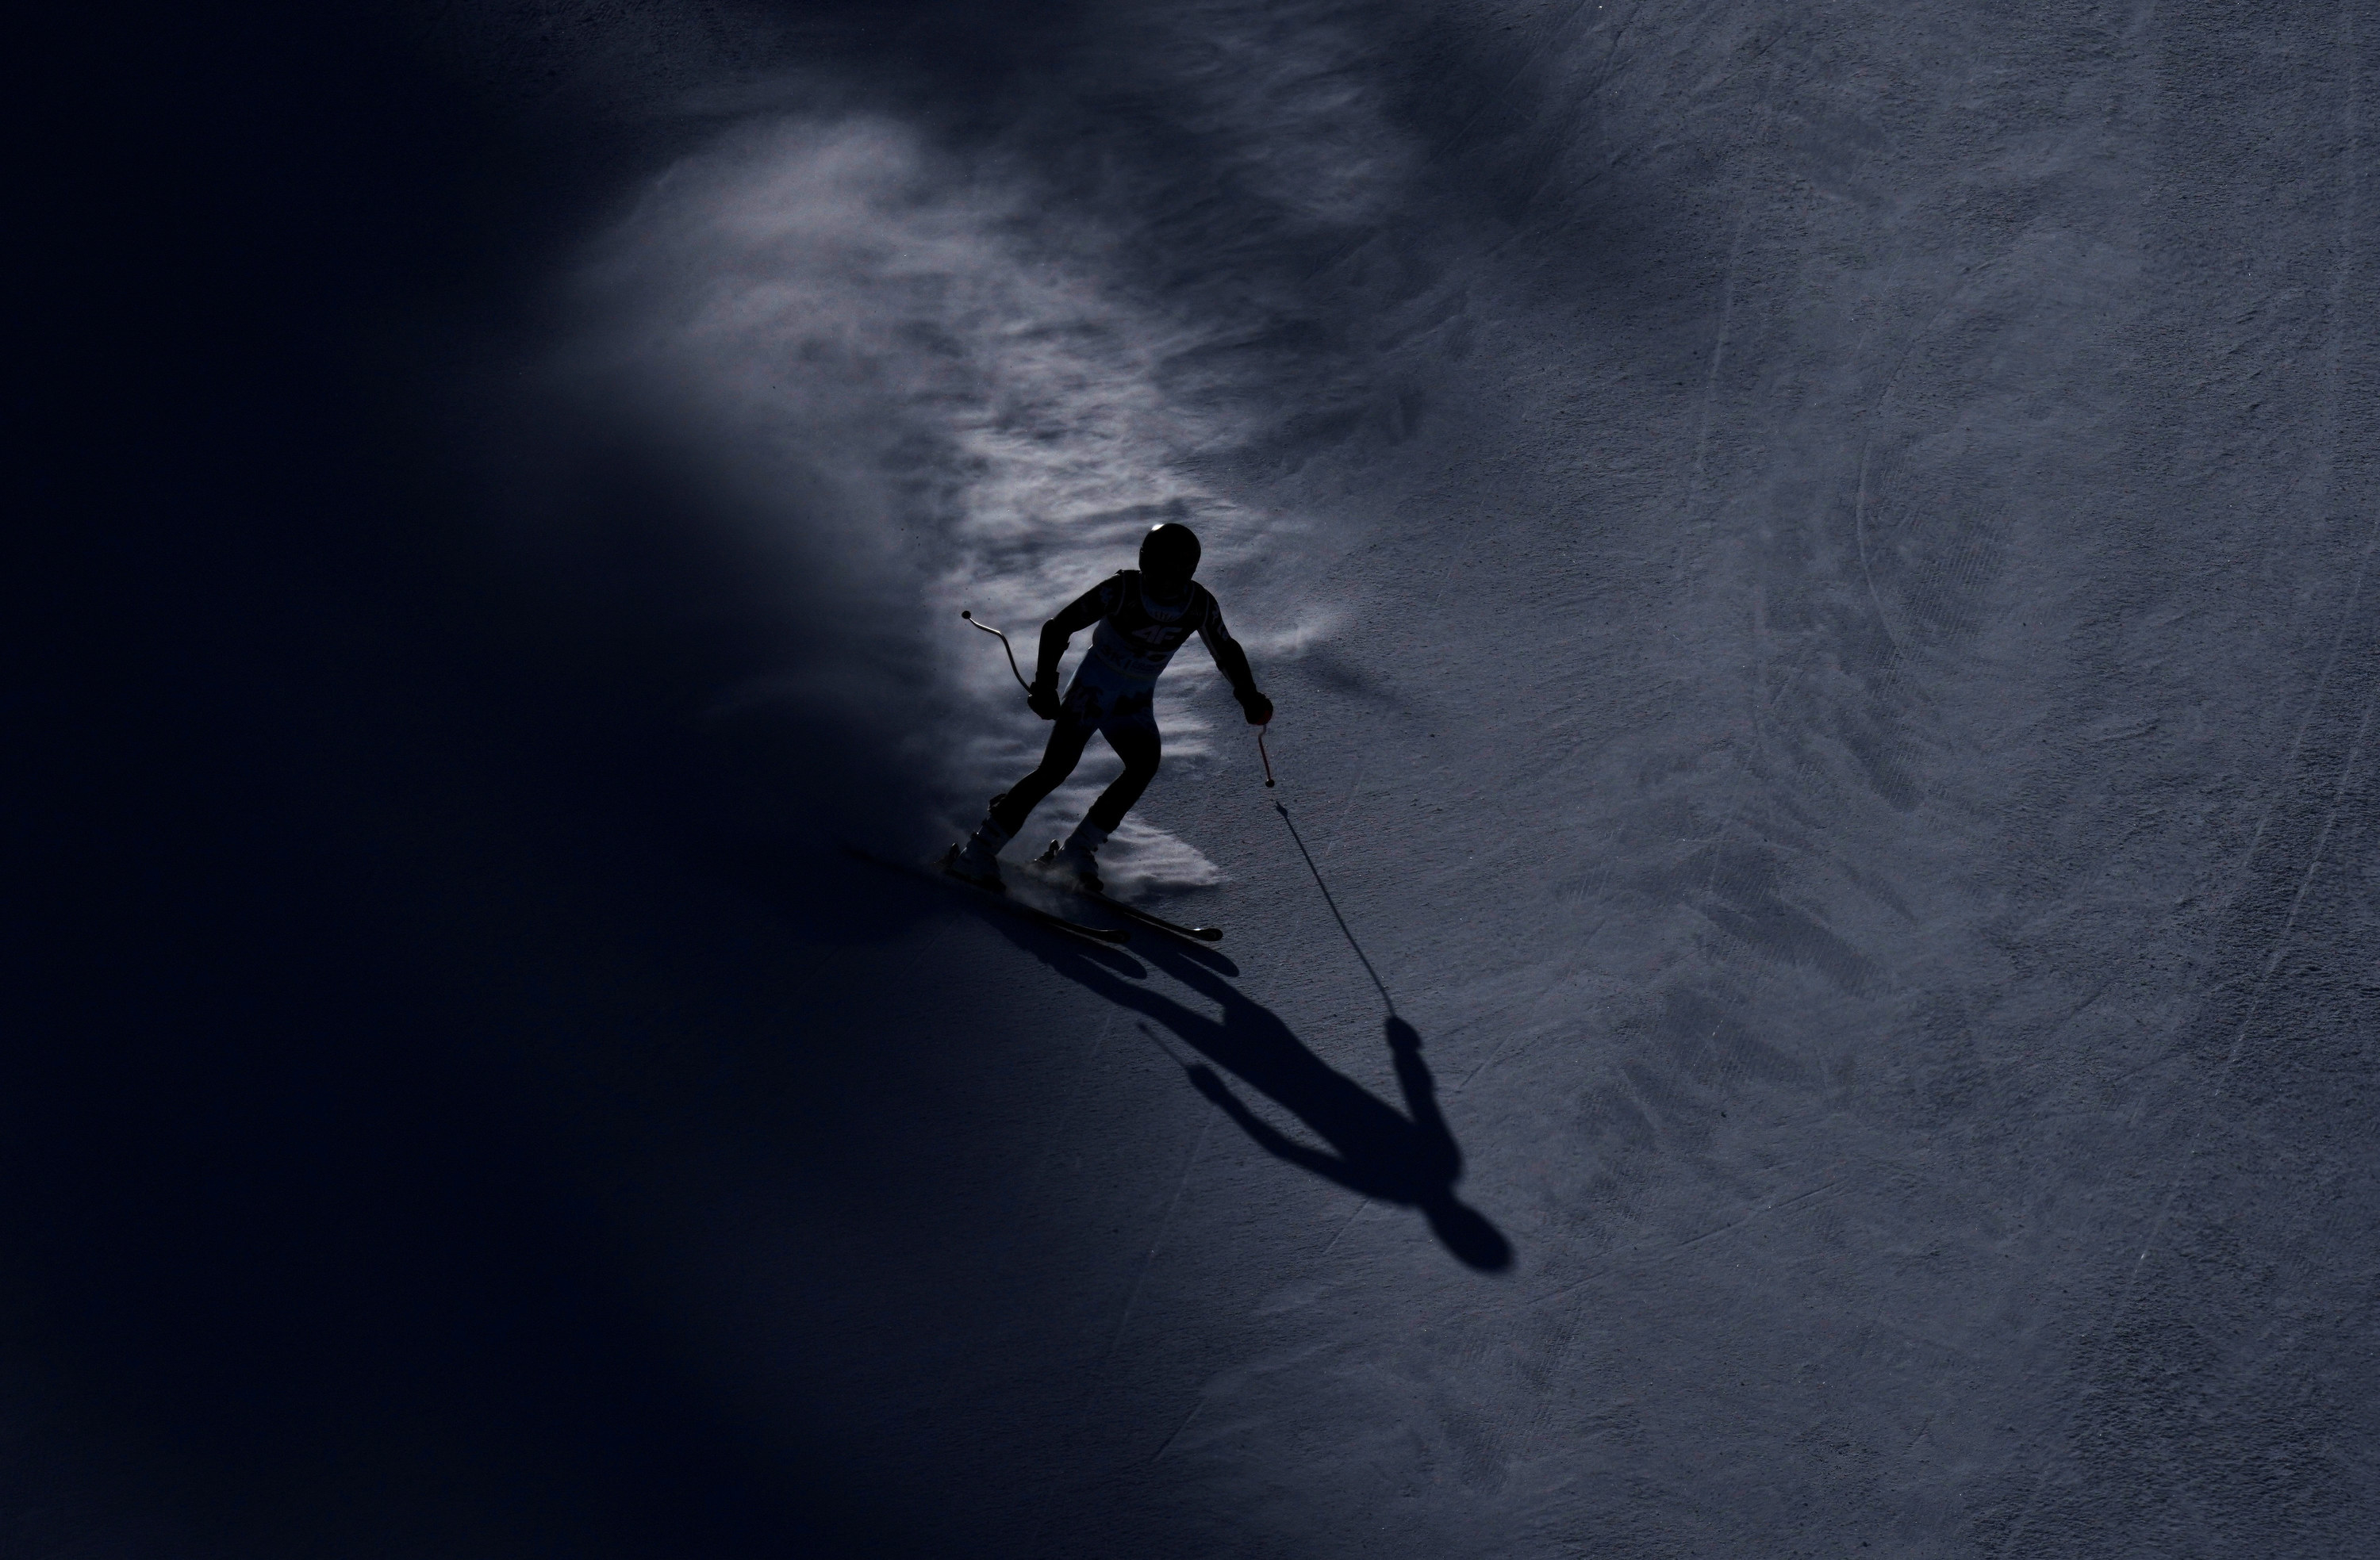 A skier crosses through snow on a dark night